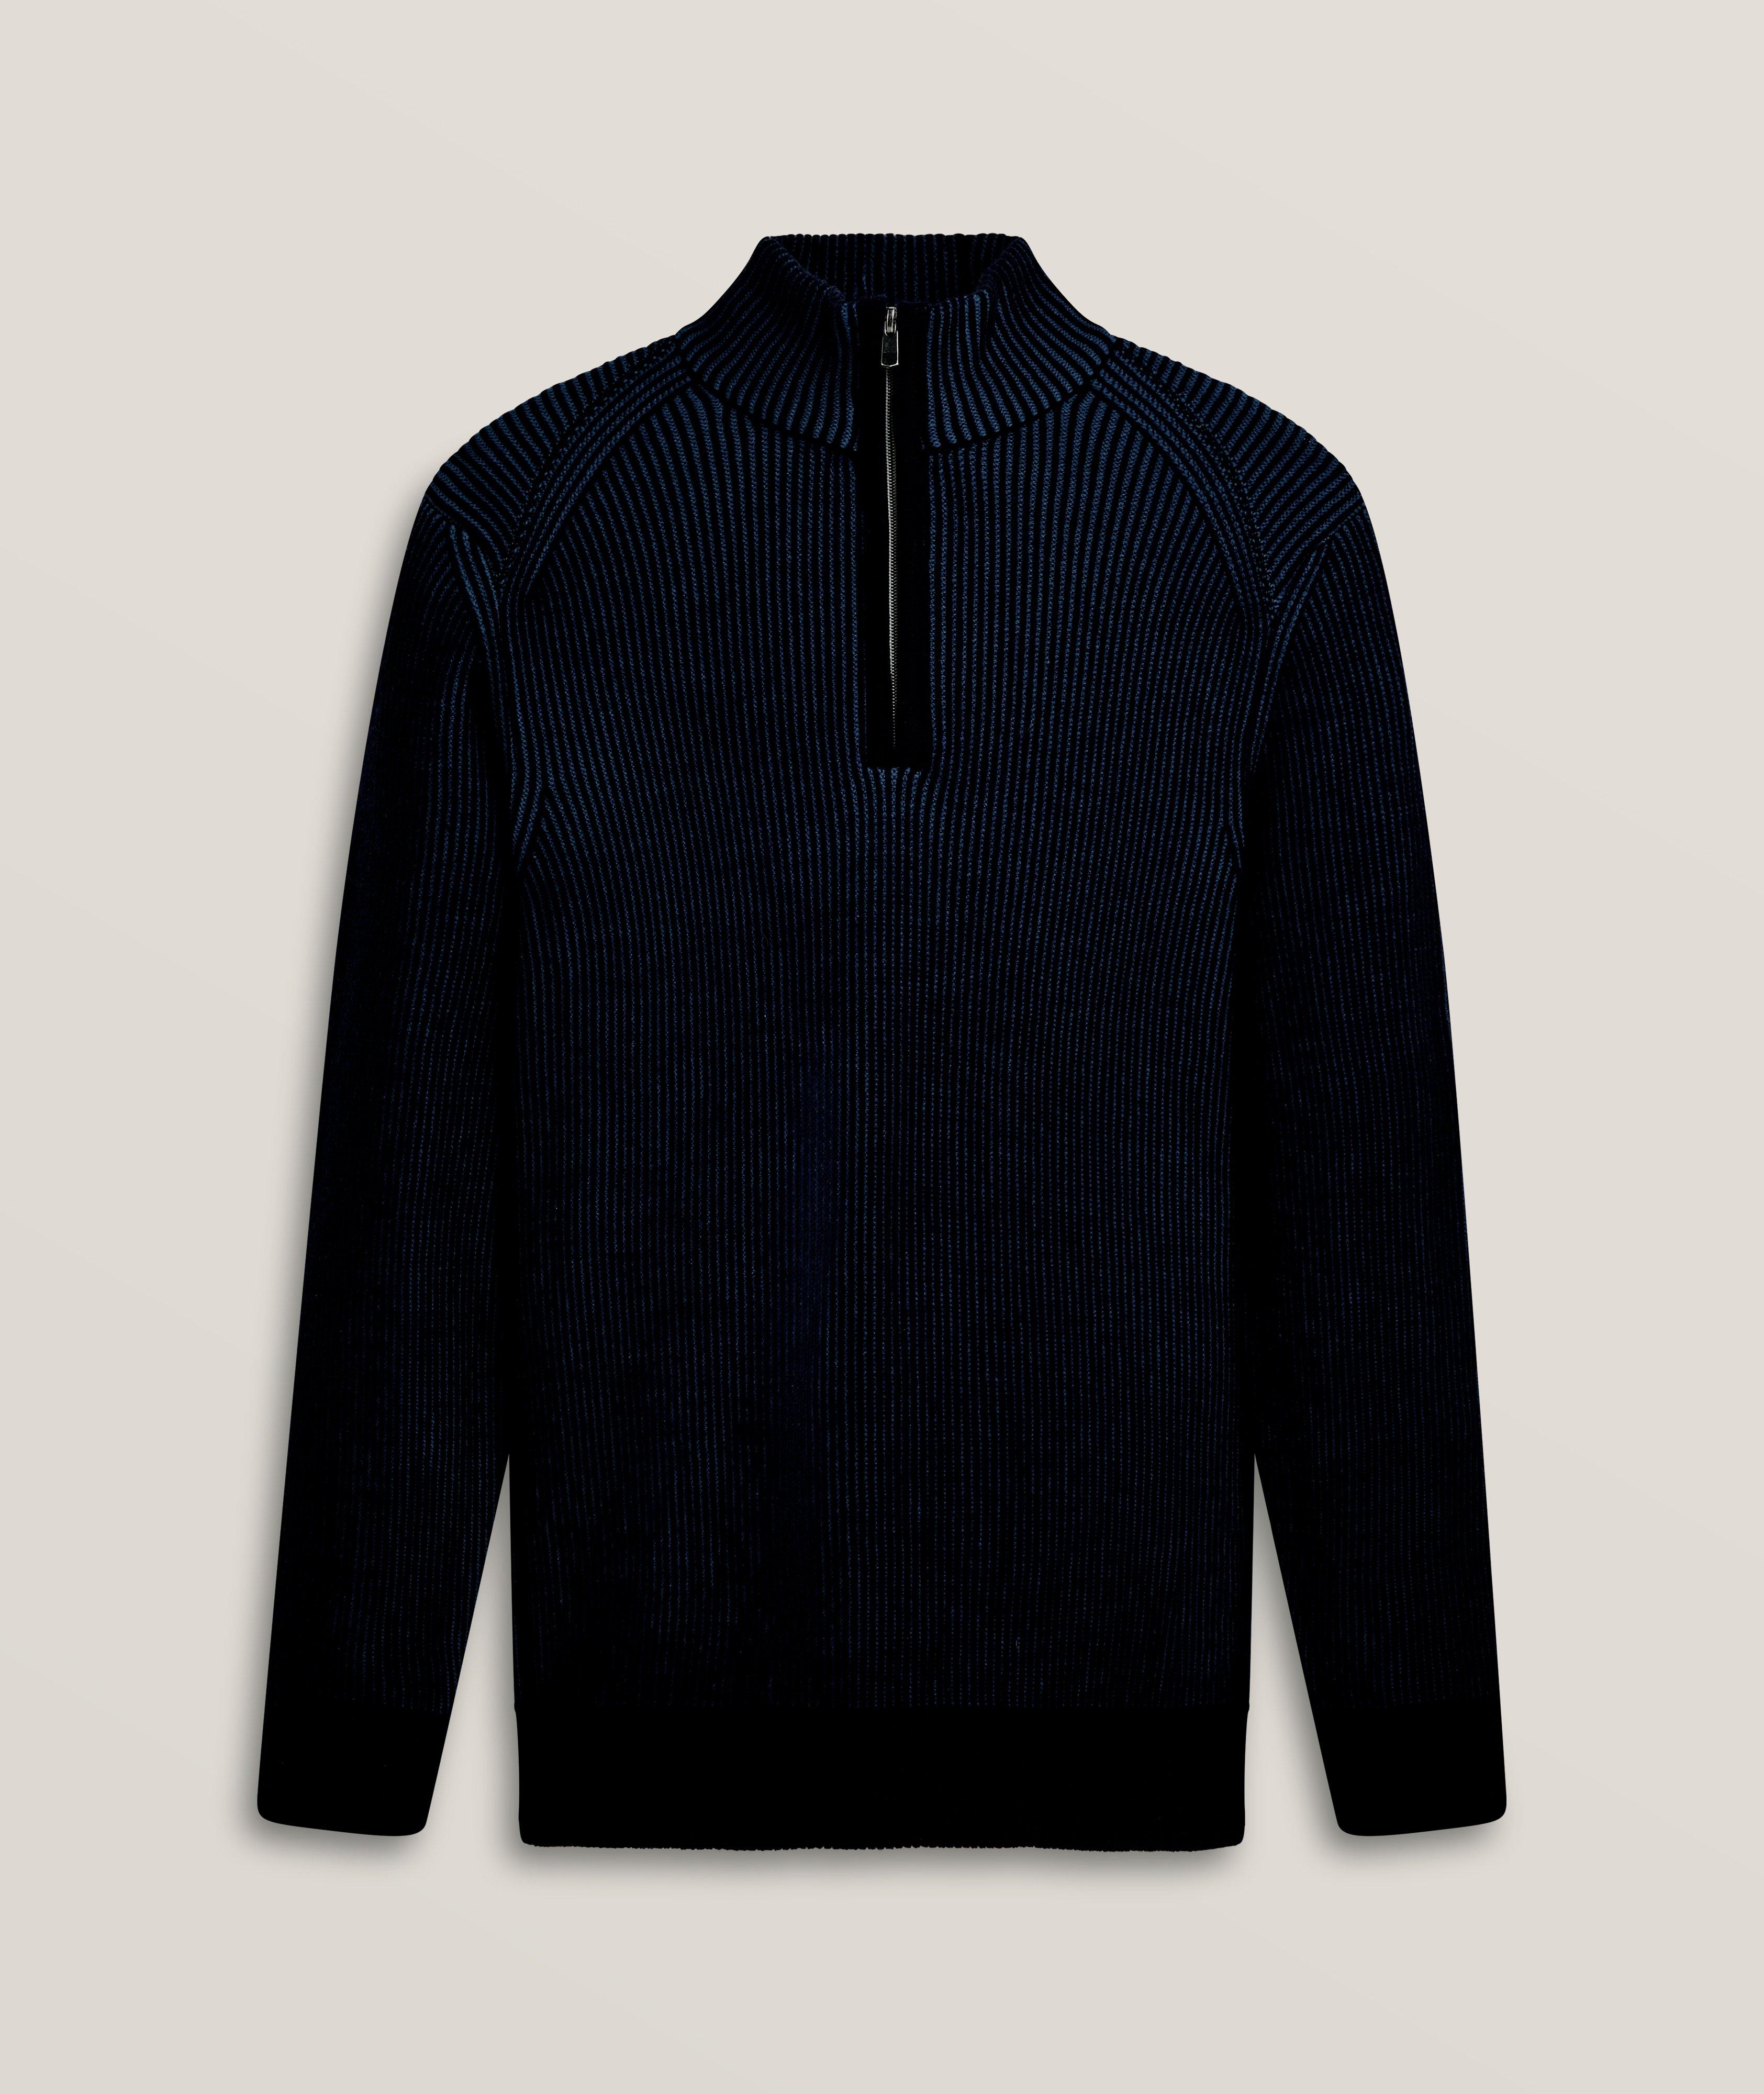 Cable Knit Merino Wool Quarter-Zip Sweater image 0